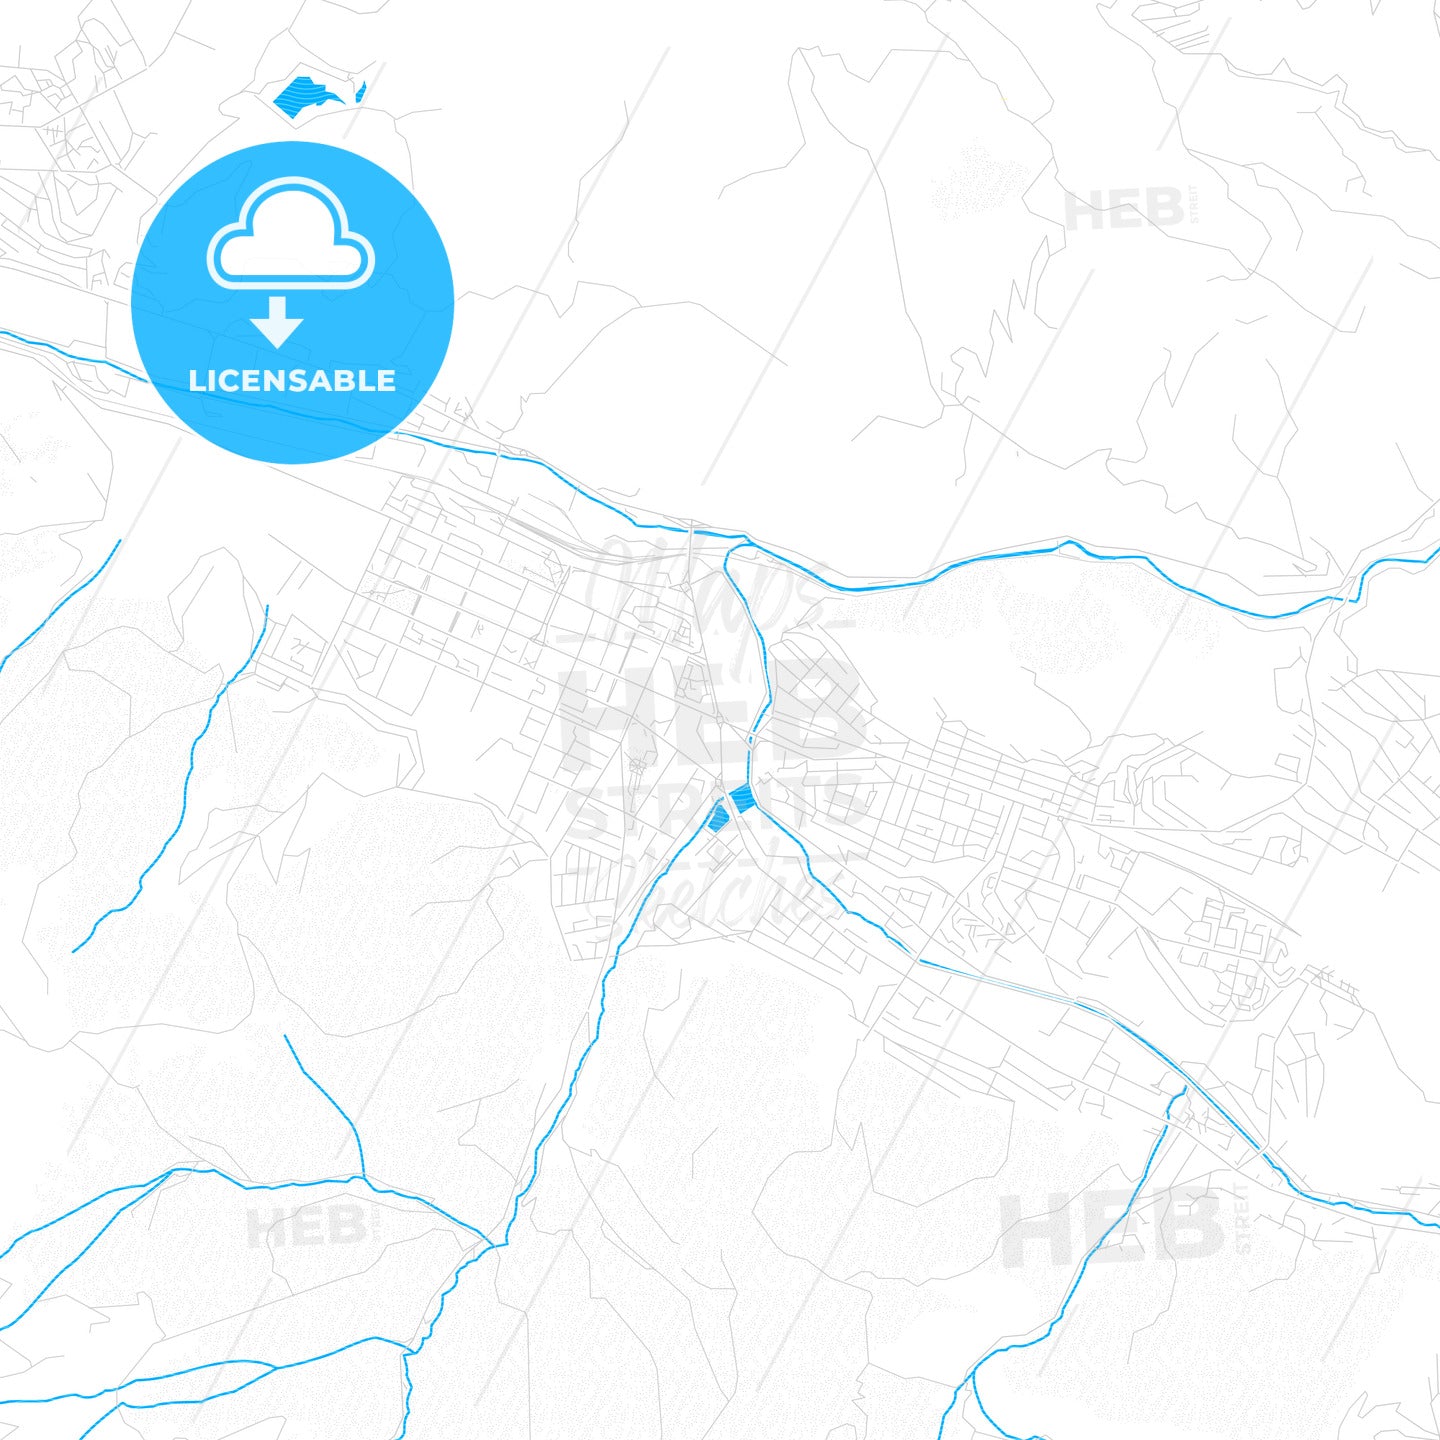 Vanadzor, Armenia PDF vector map with water in focus